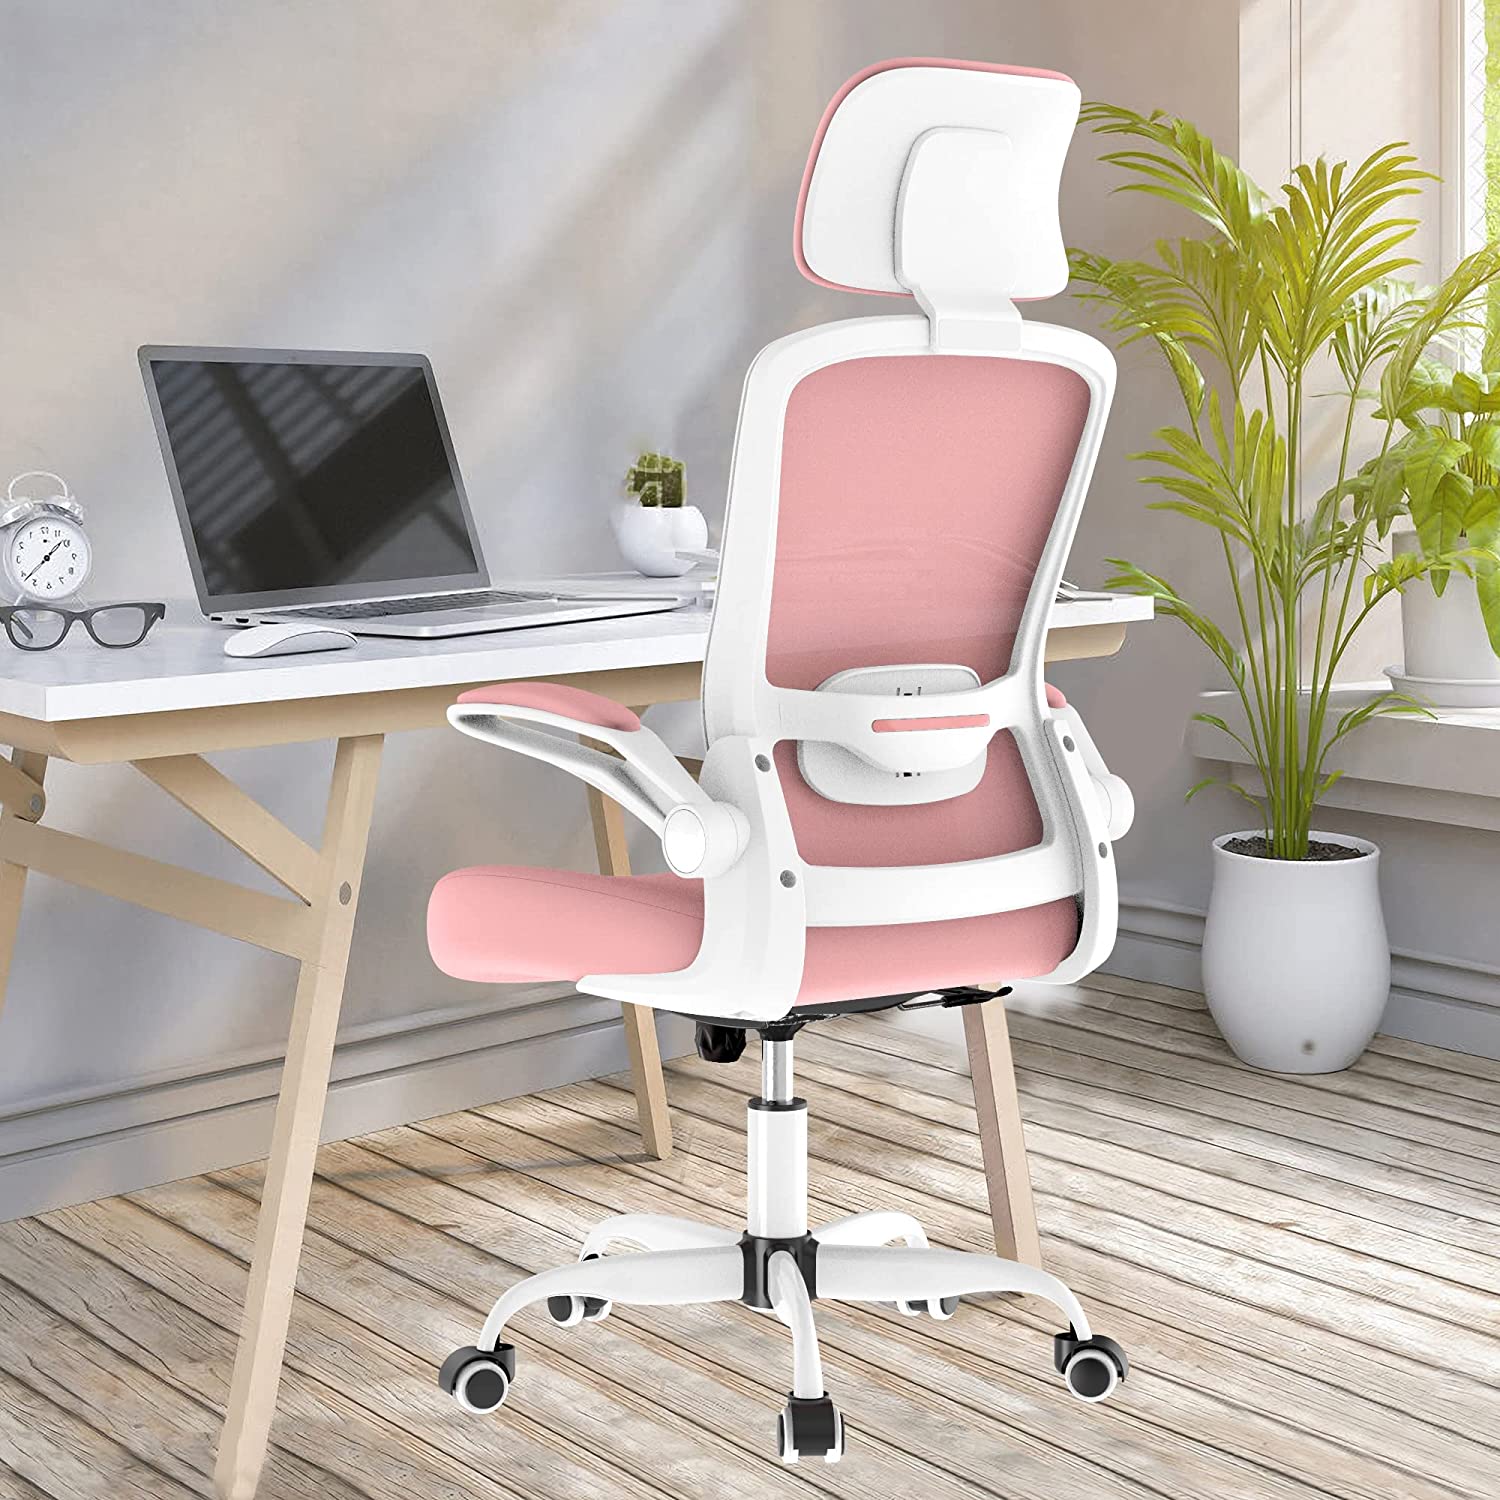 Mimoglad Office Chair, High Back Ergonomic Desk Chair [...]